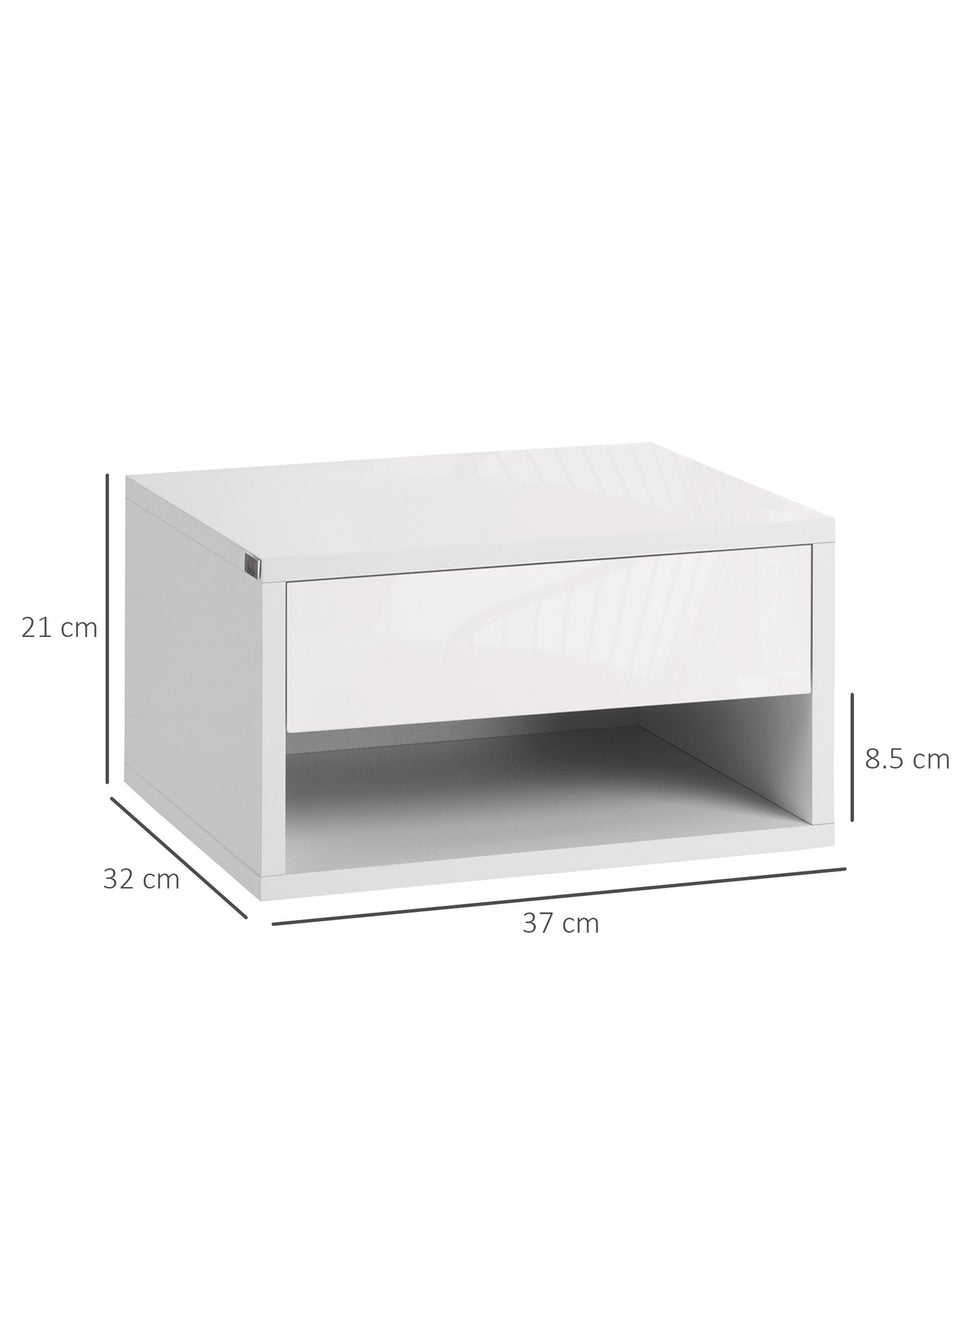 HOMCOM White Floating Bedside Table Set of 2 (37cm x 32cm x 21cm)